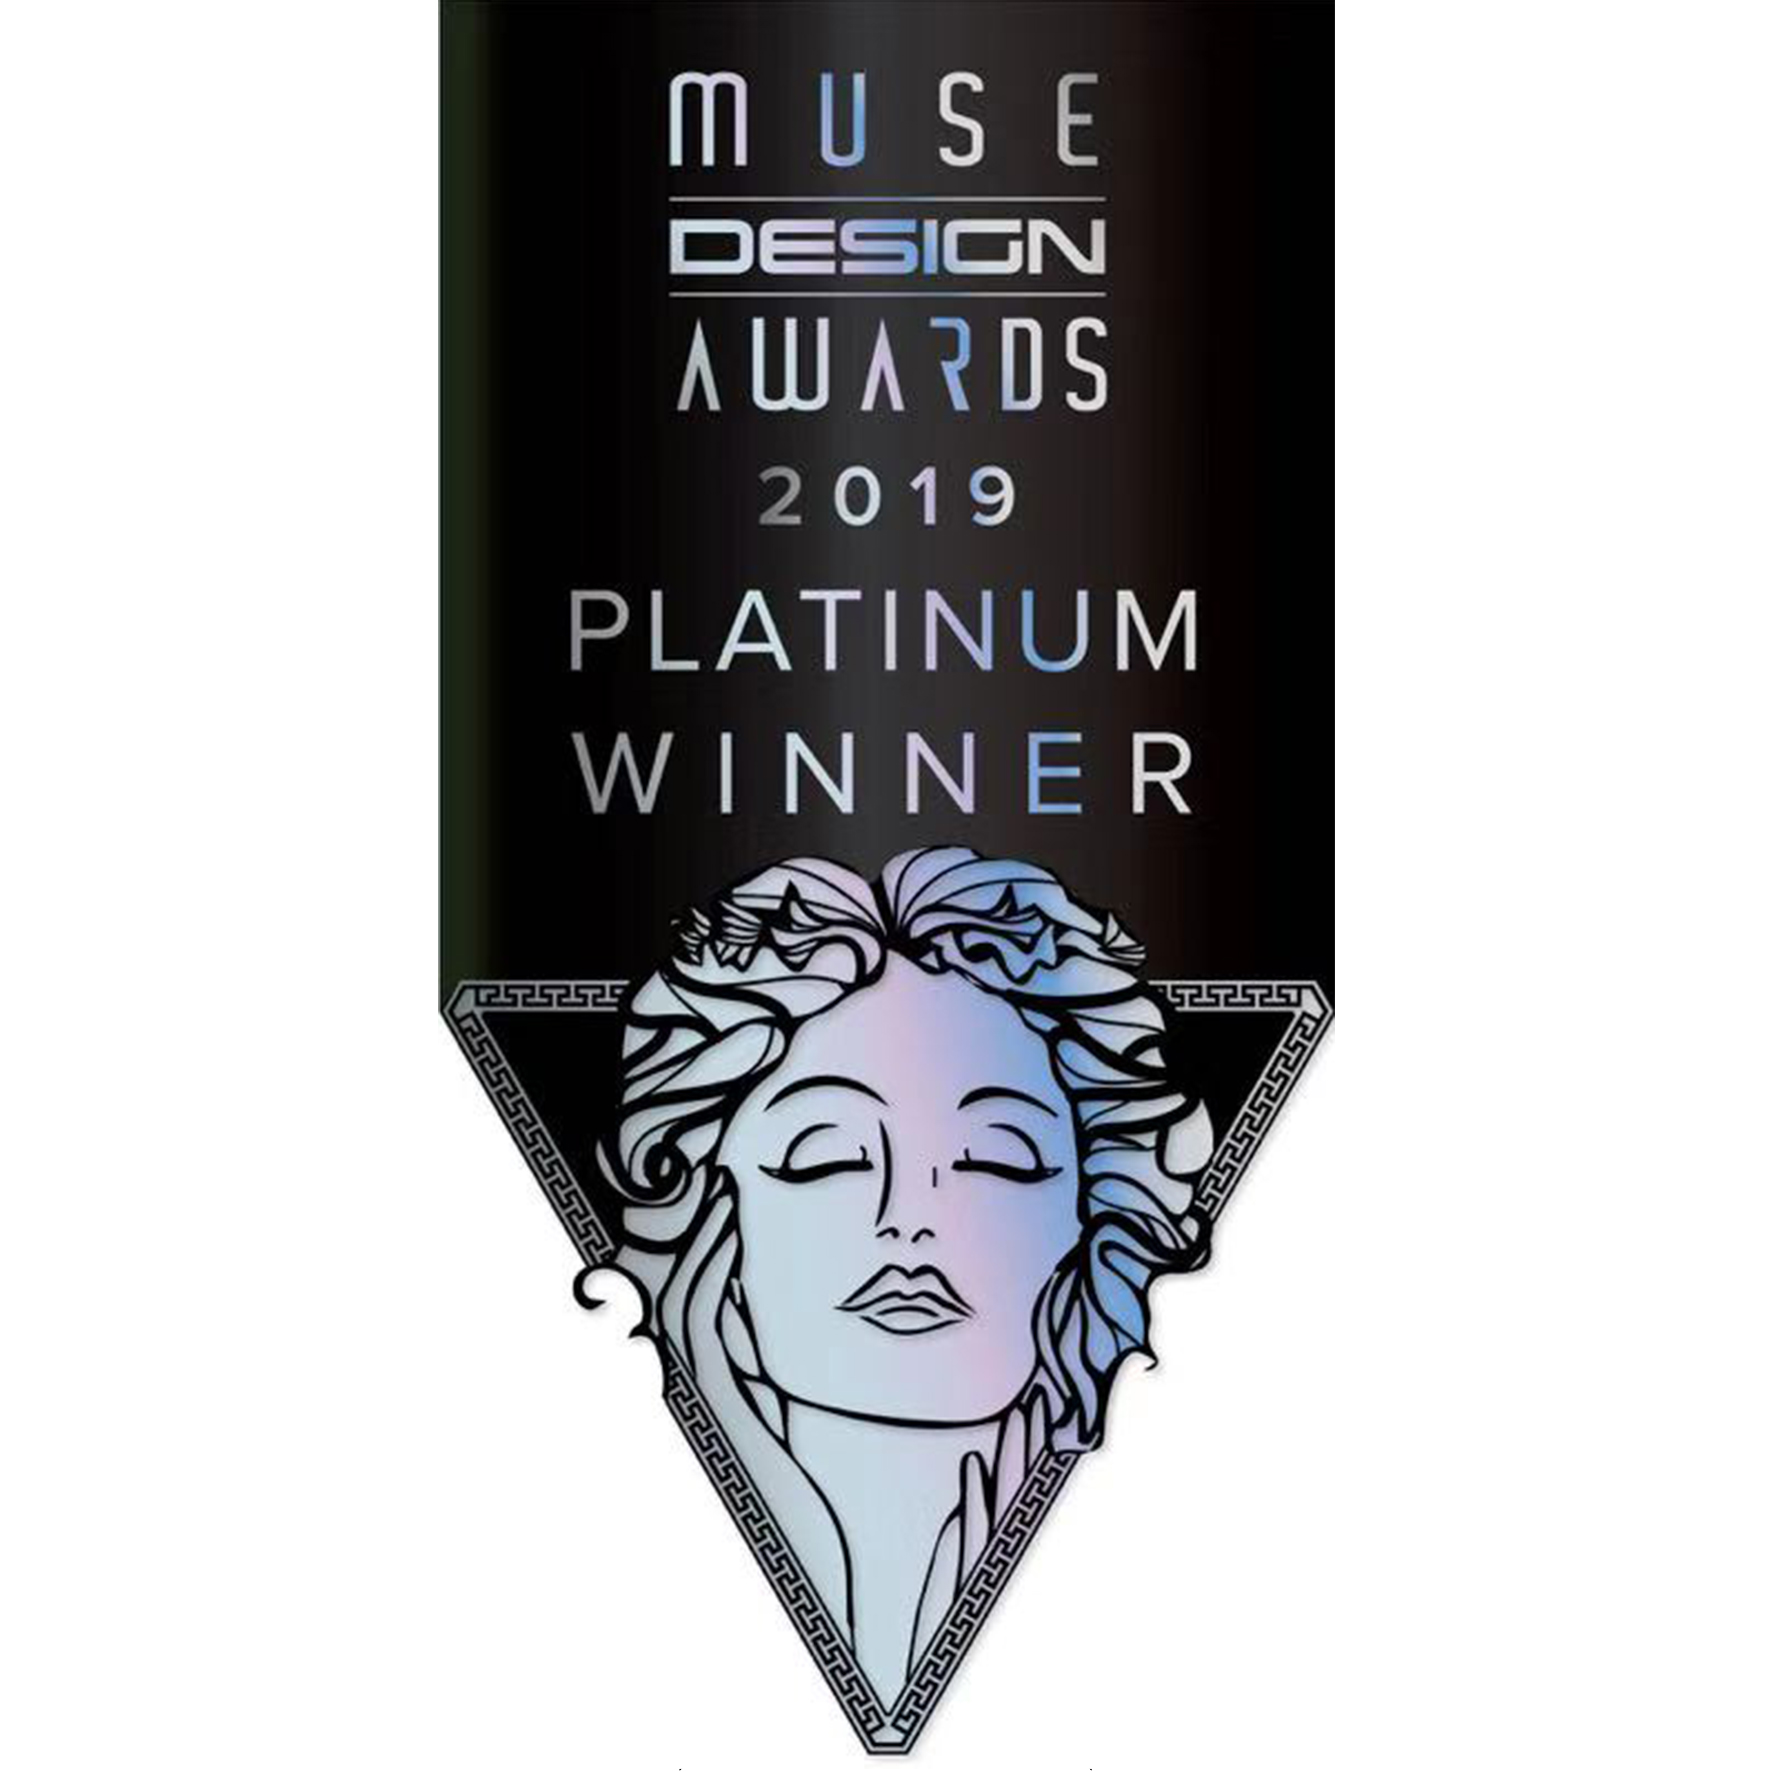 MUSE Design Awards 2019 - Platinum Winner, International Awards Associate